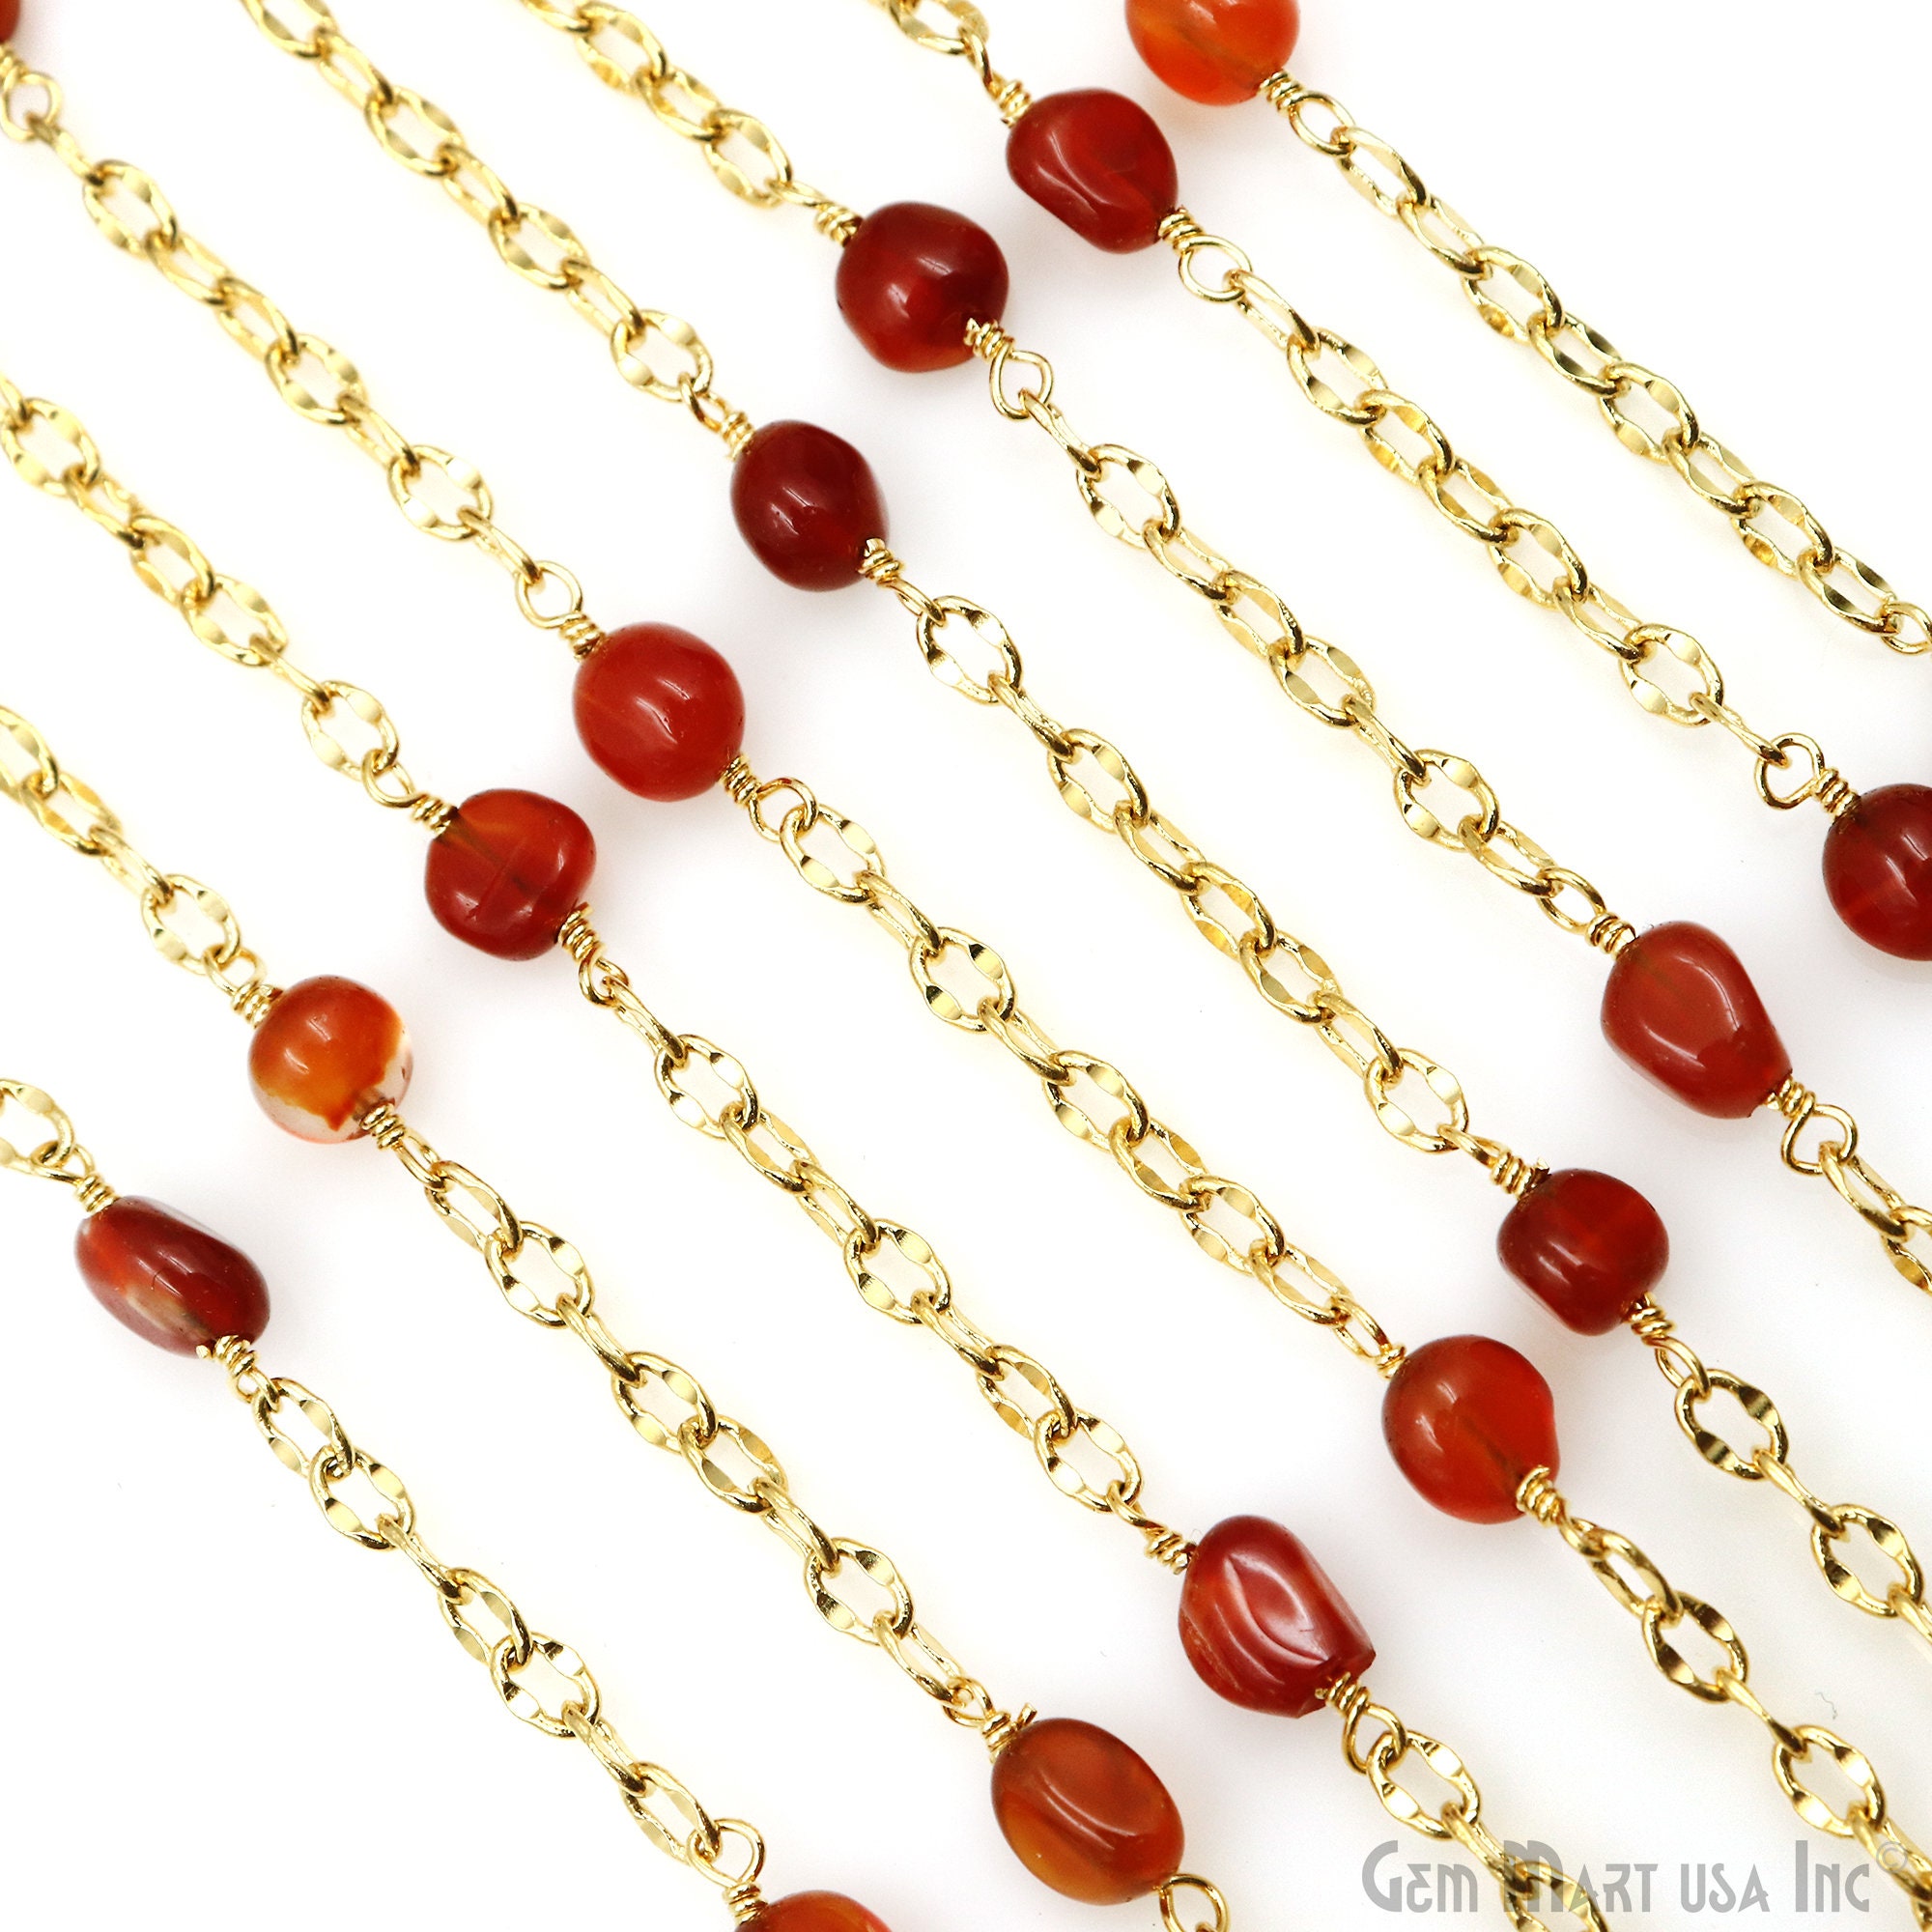 Carnelian Tumble Beads Rosary Chain, 8x5mm Carnelian Gemstone Tumble Beads  Necklace, Gold Plated Rosary Chain Gemmartusa GPCN-30250 